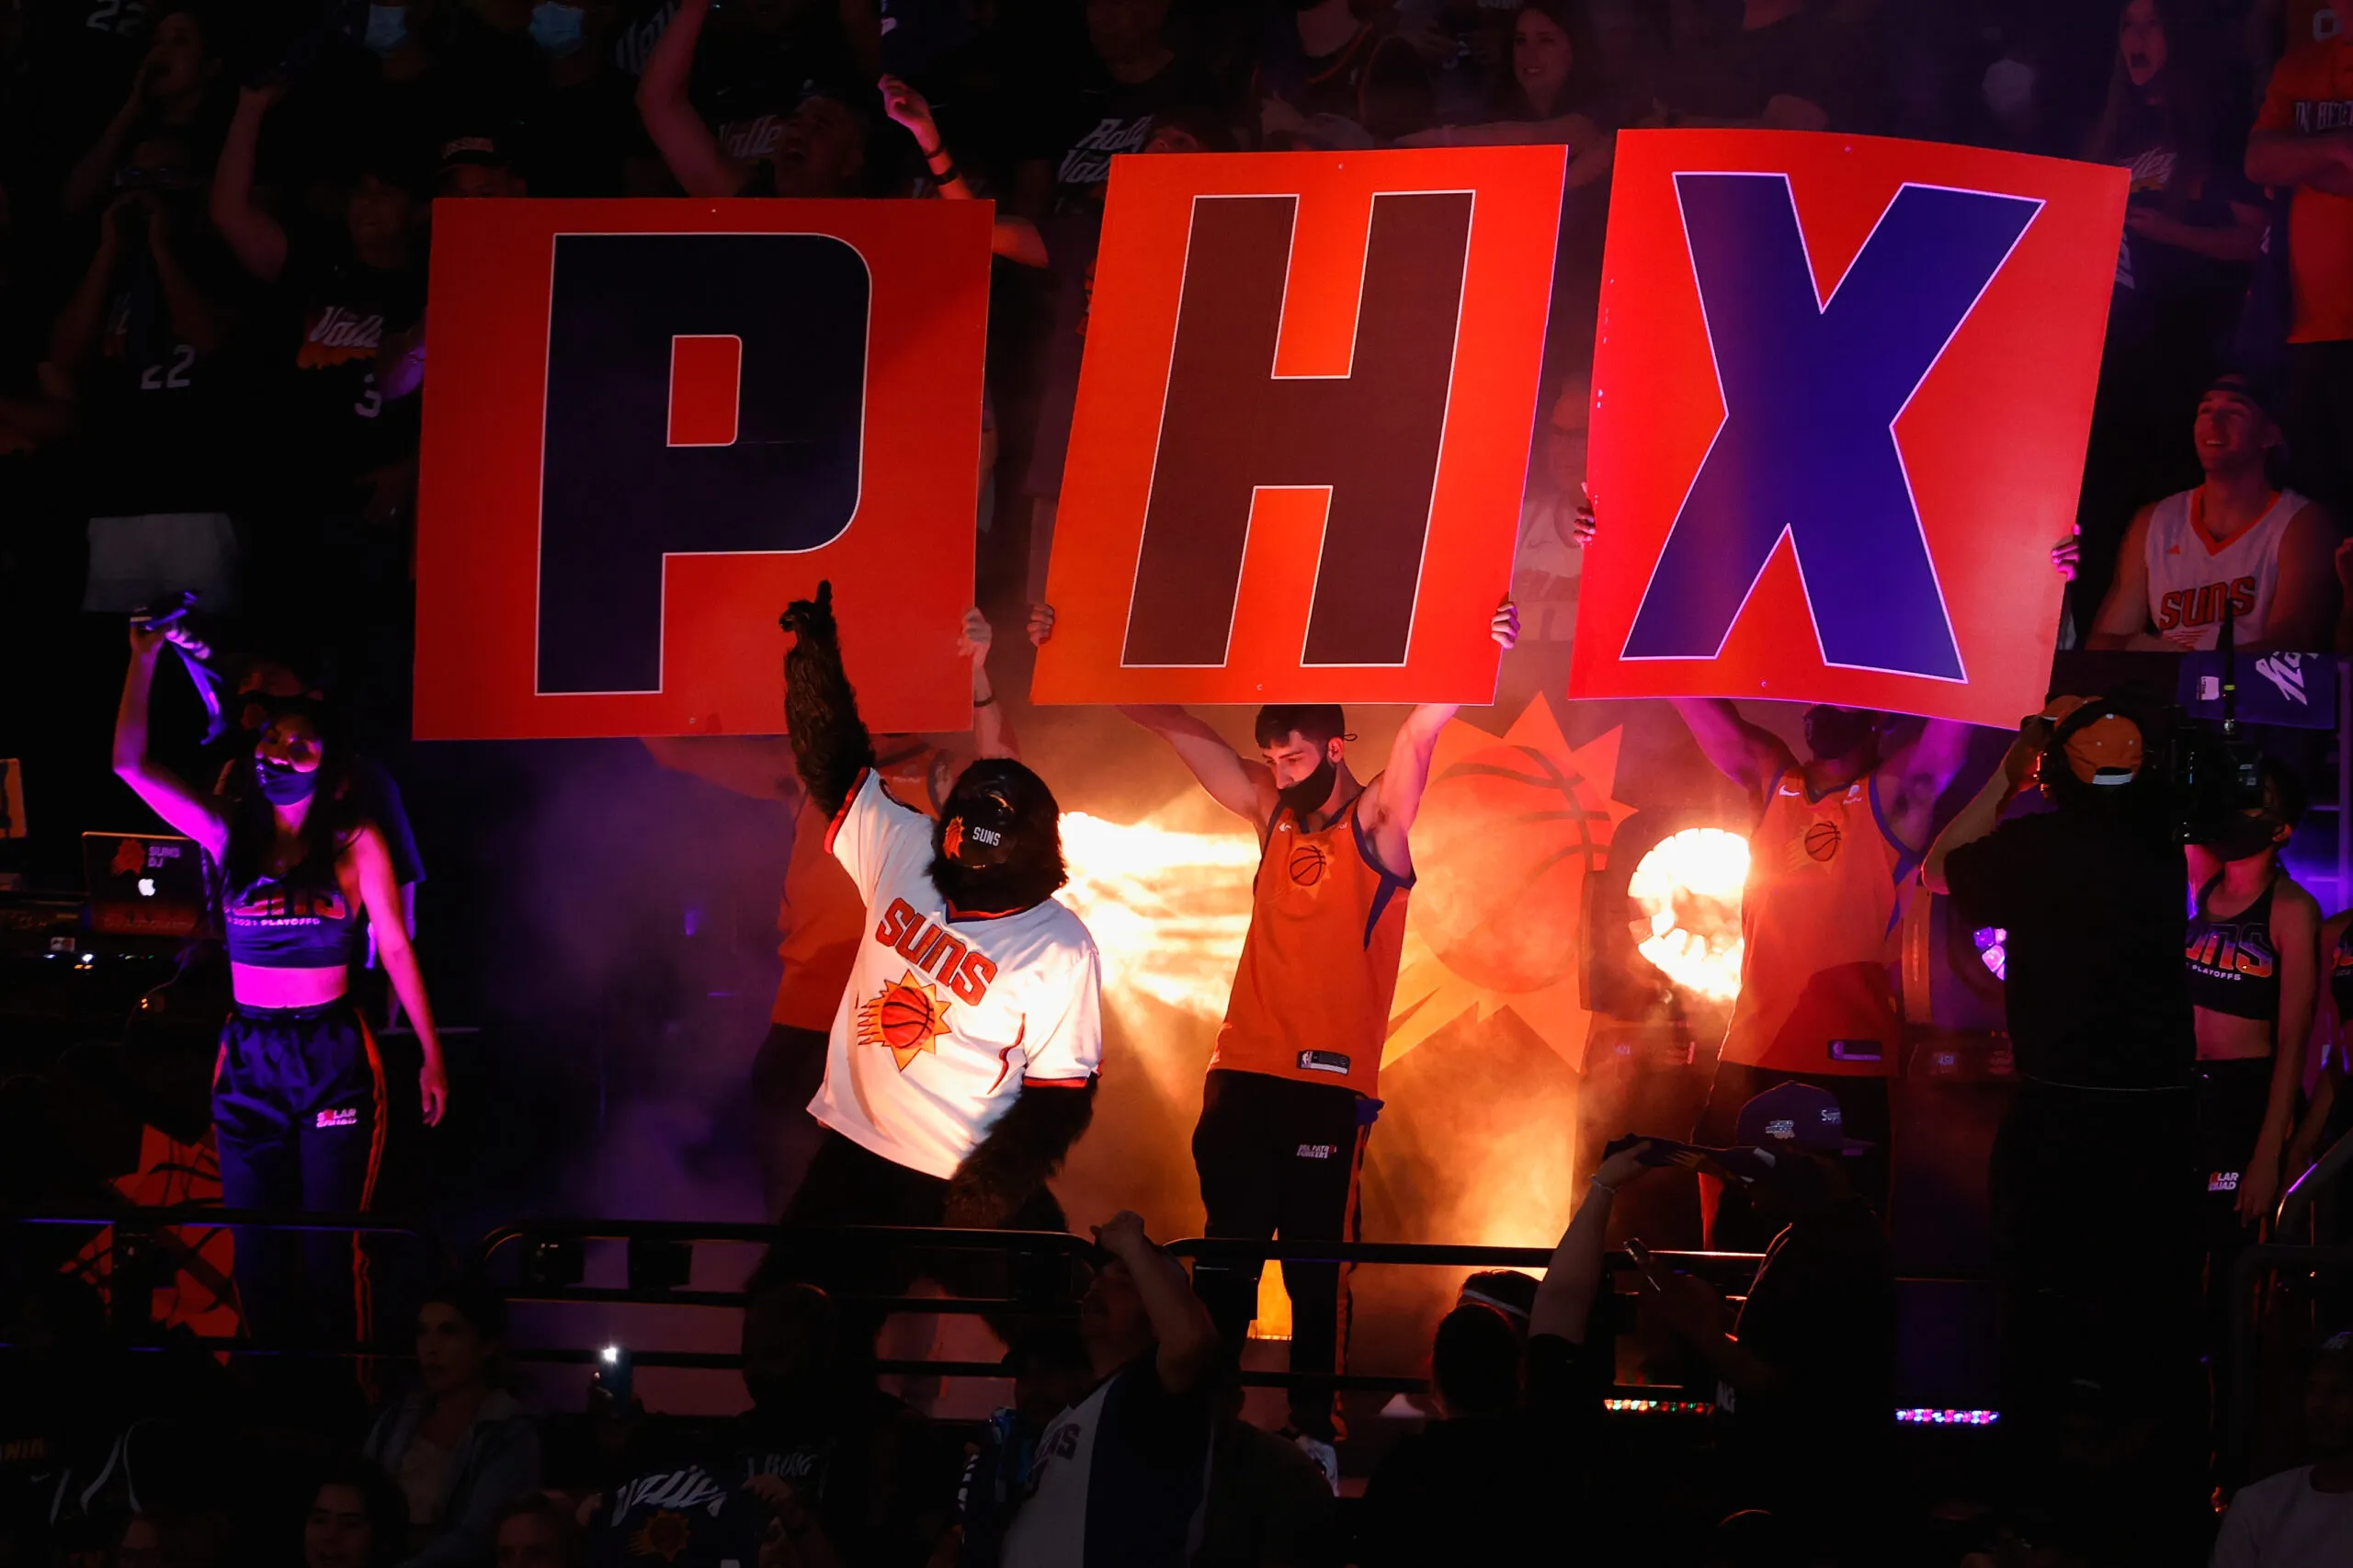 The Gorilla, the NBA mascot for the Phoenix Suns